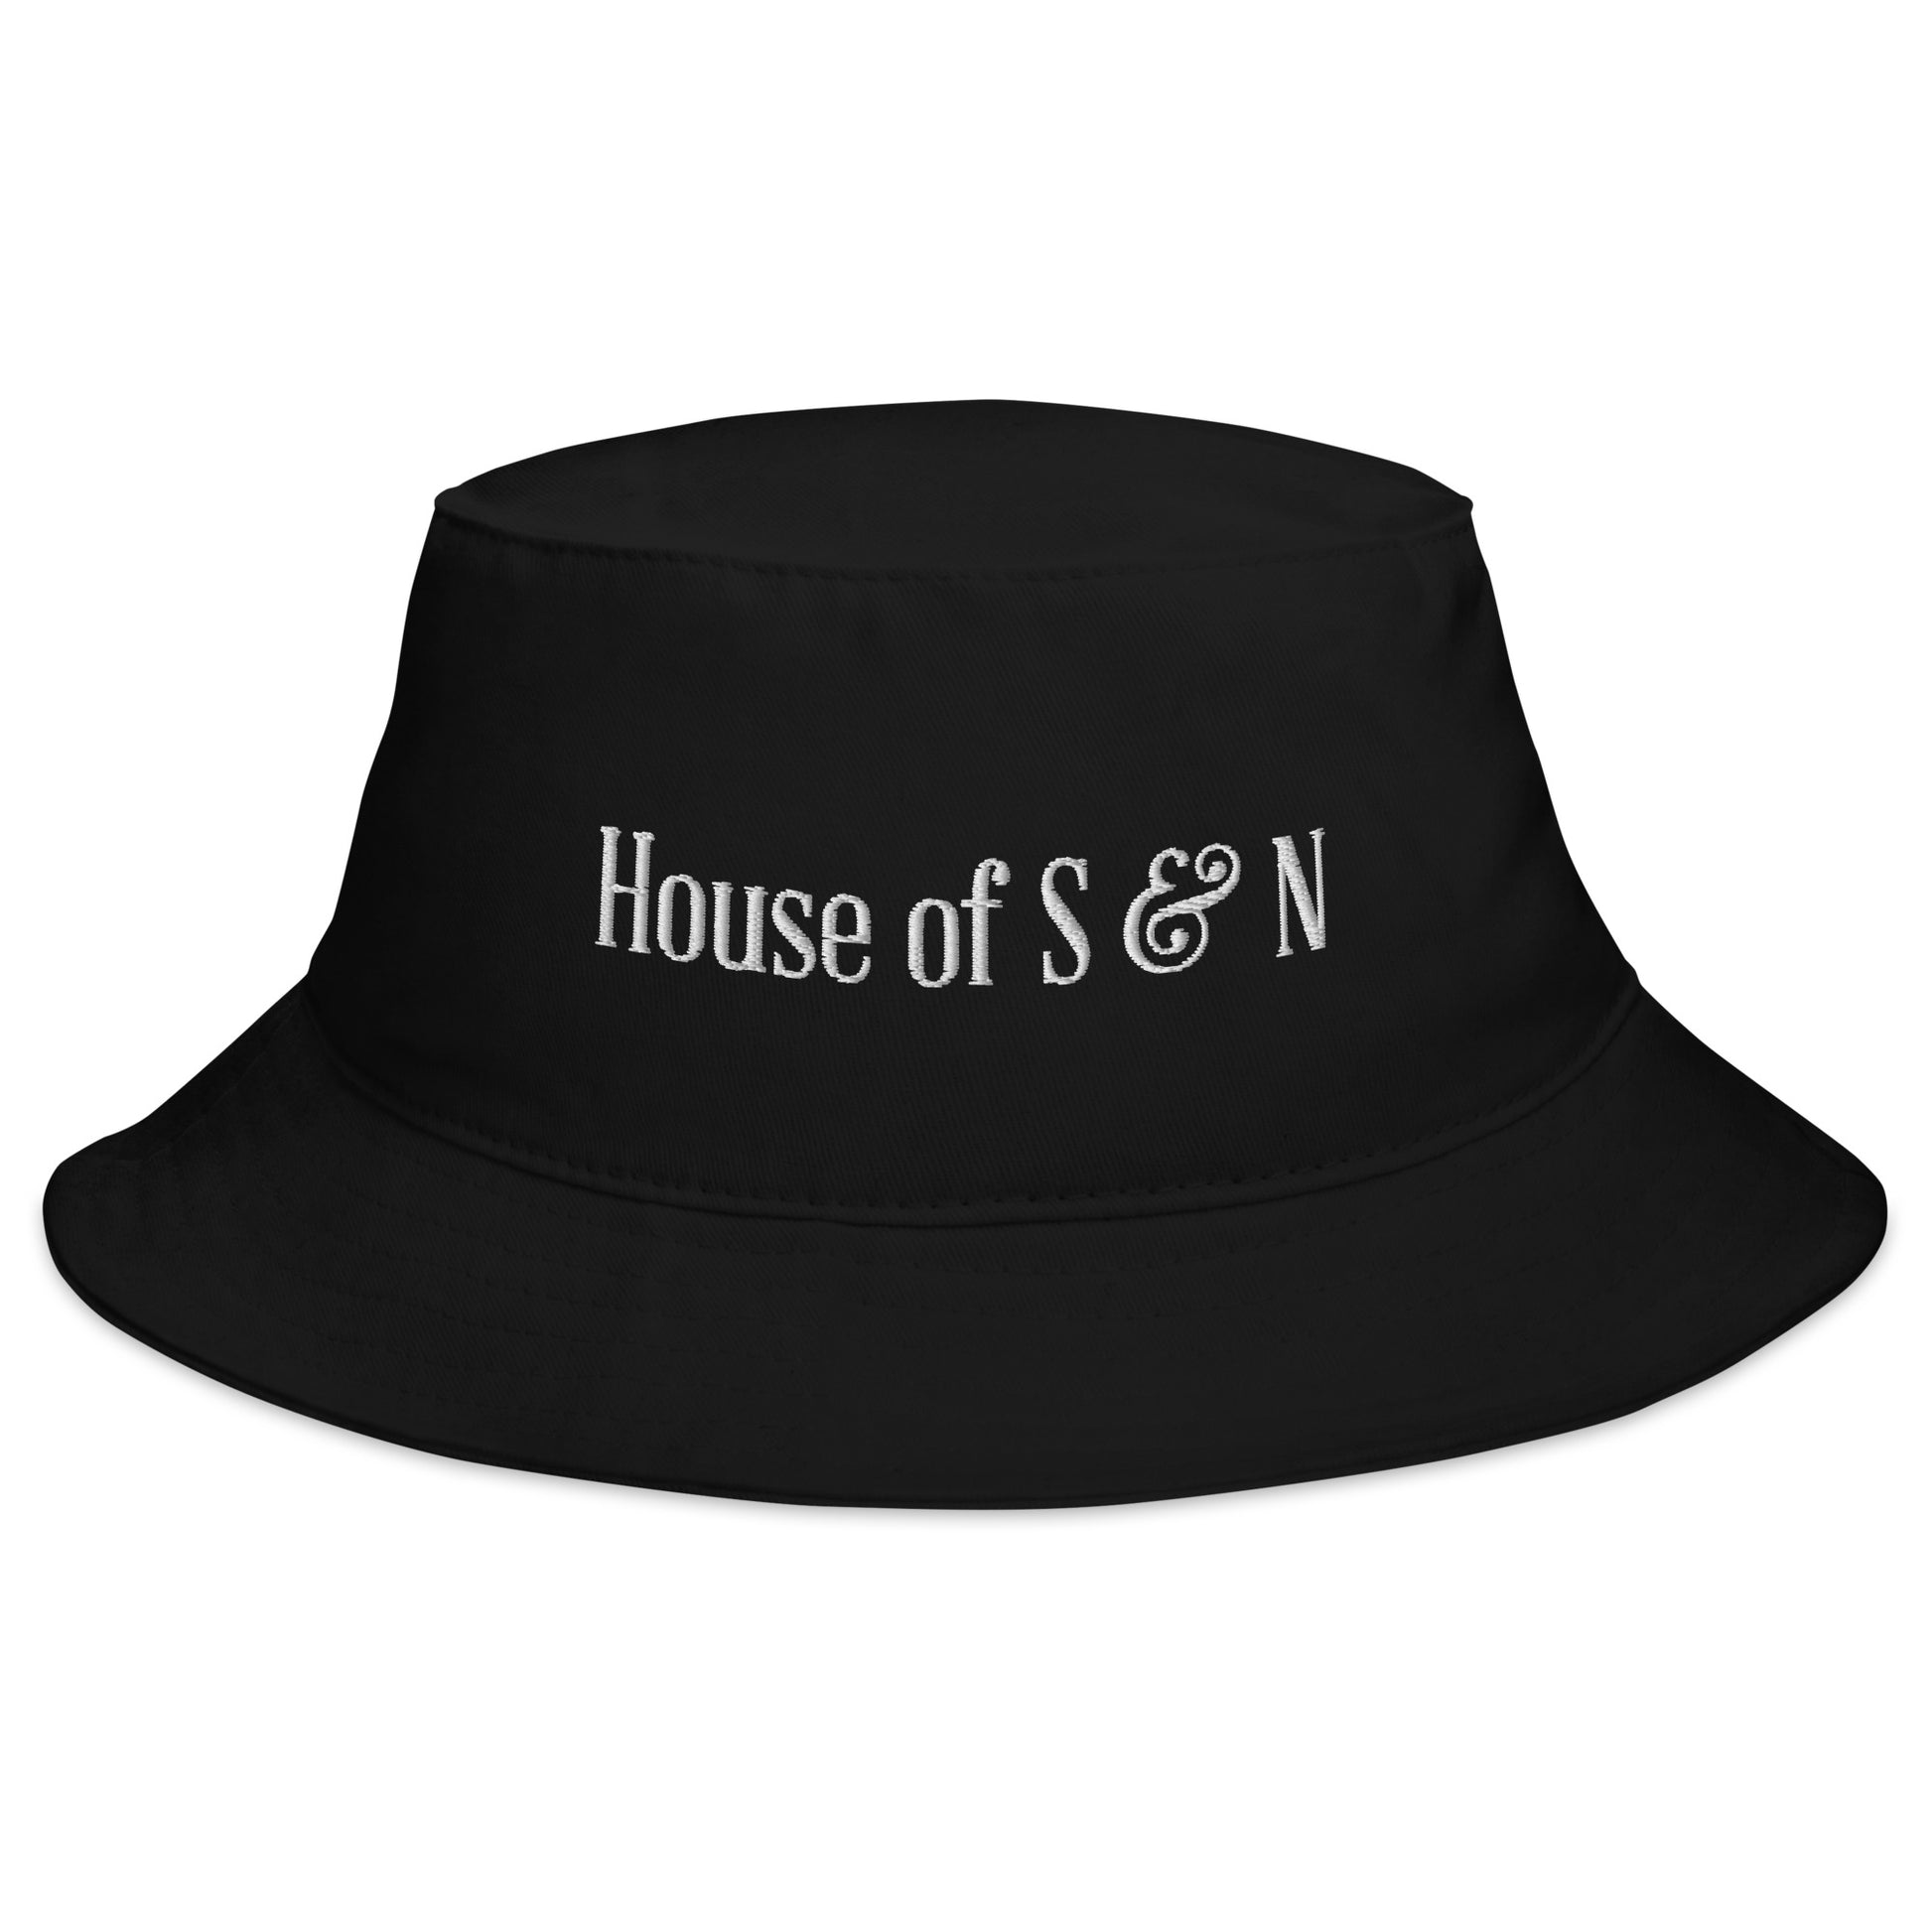 Bucket Hat - House of S & N